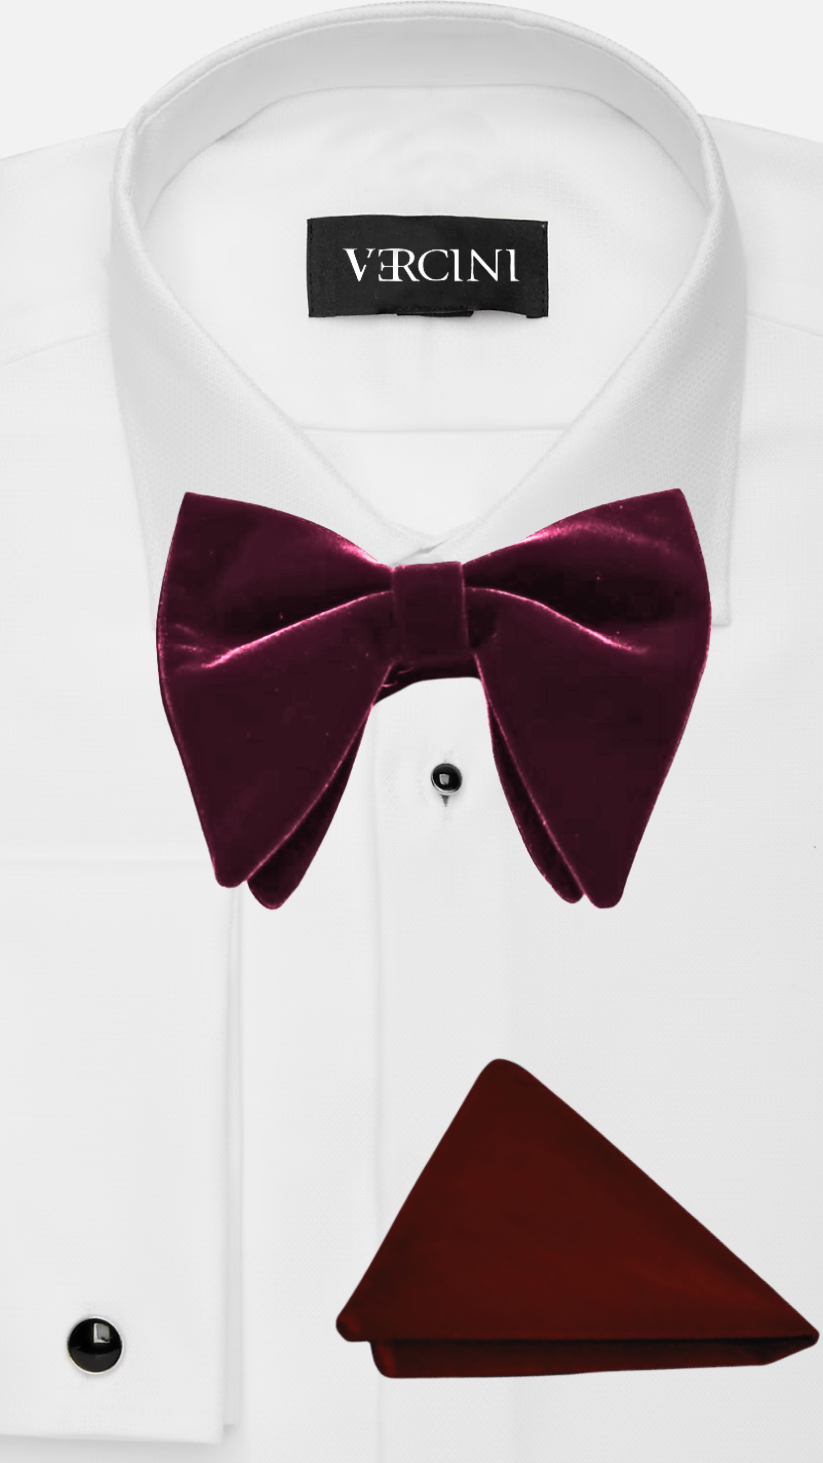 Velvet big bow tie with pocket square